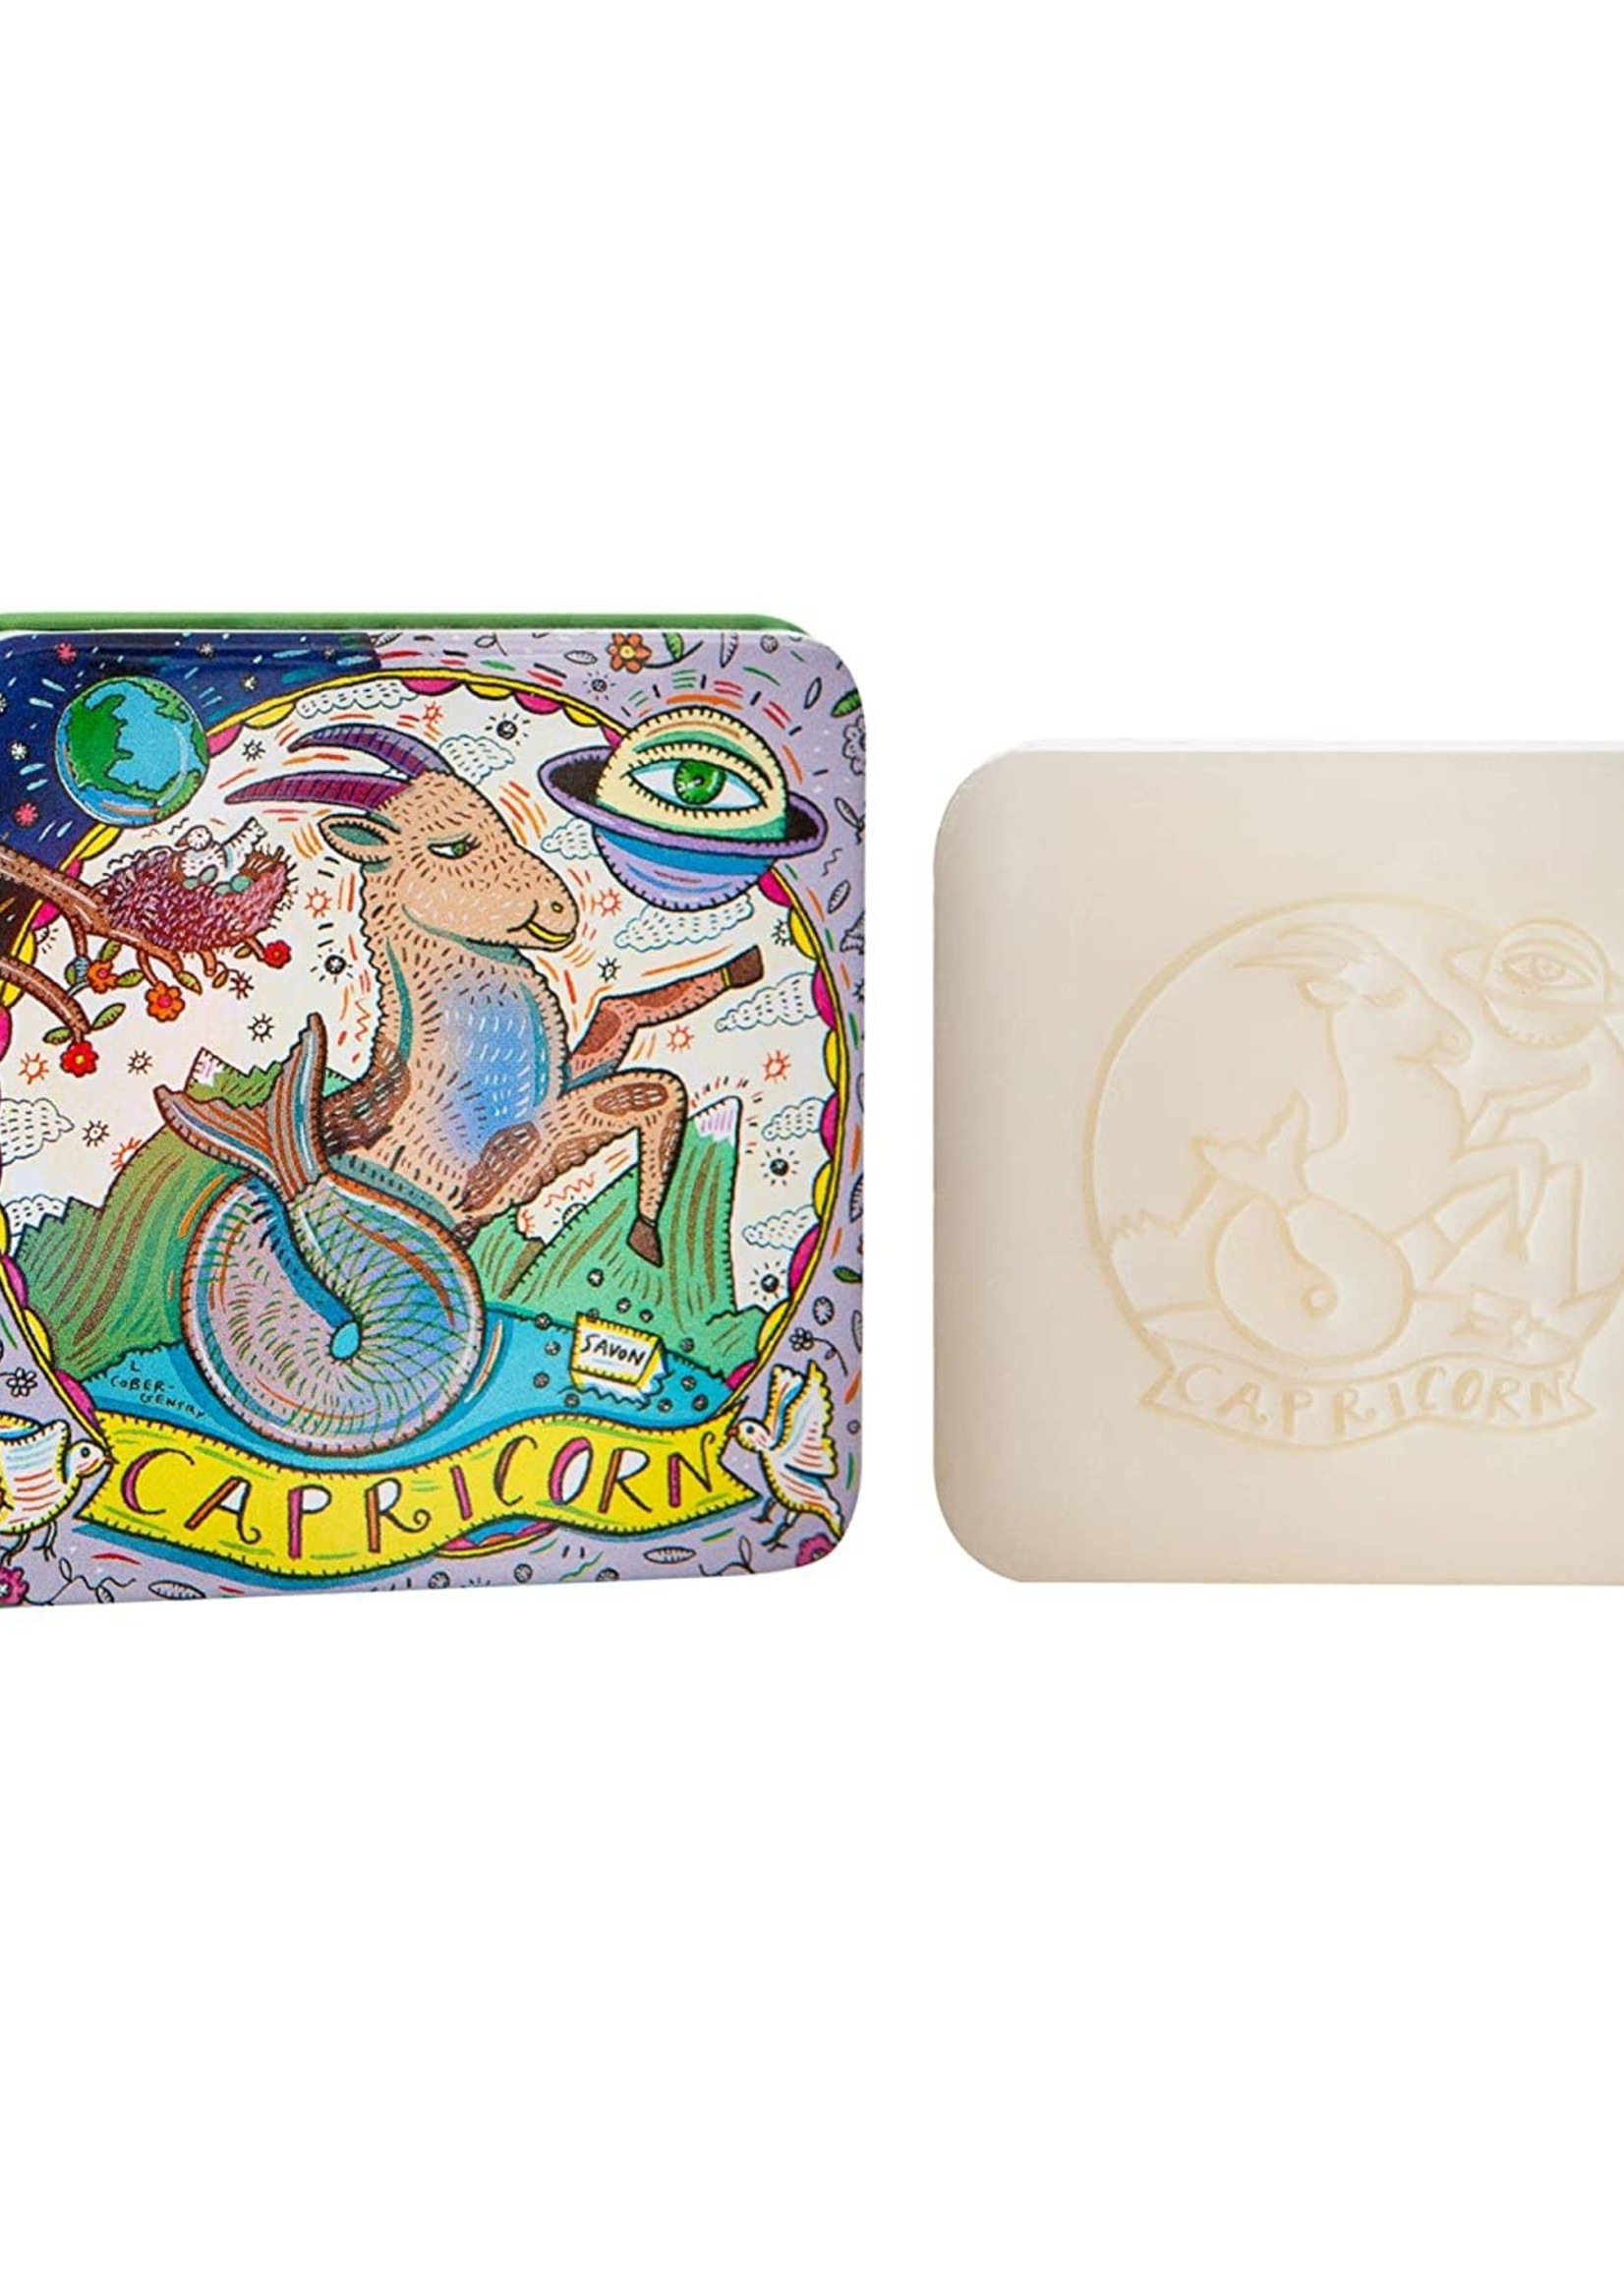 Zodiac Soap in Can